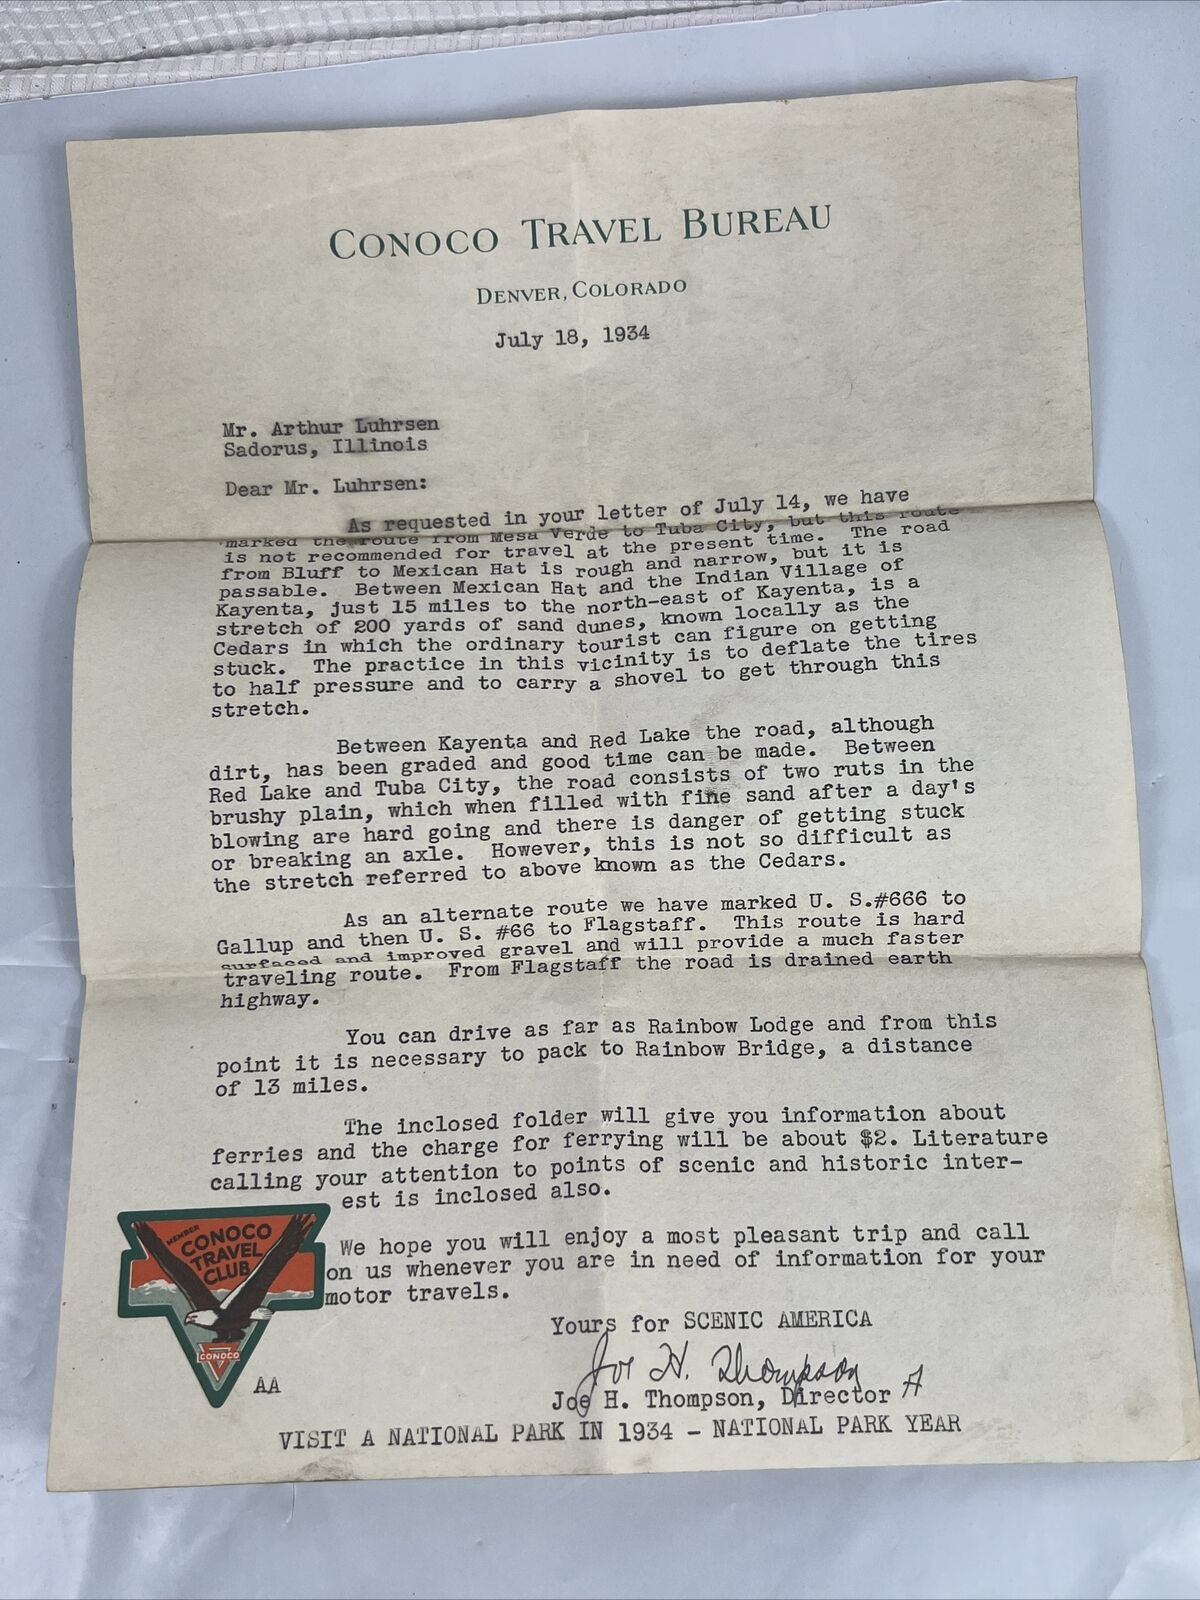 1937 Conoco Travel Bureau Denver Colorado Letter Sadorus Illinois 1937 Letter